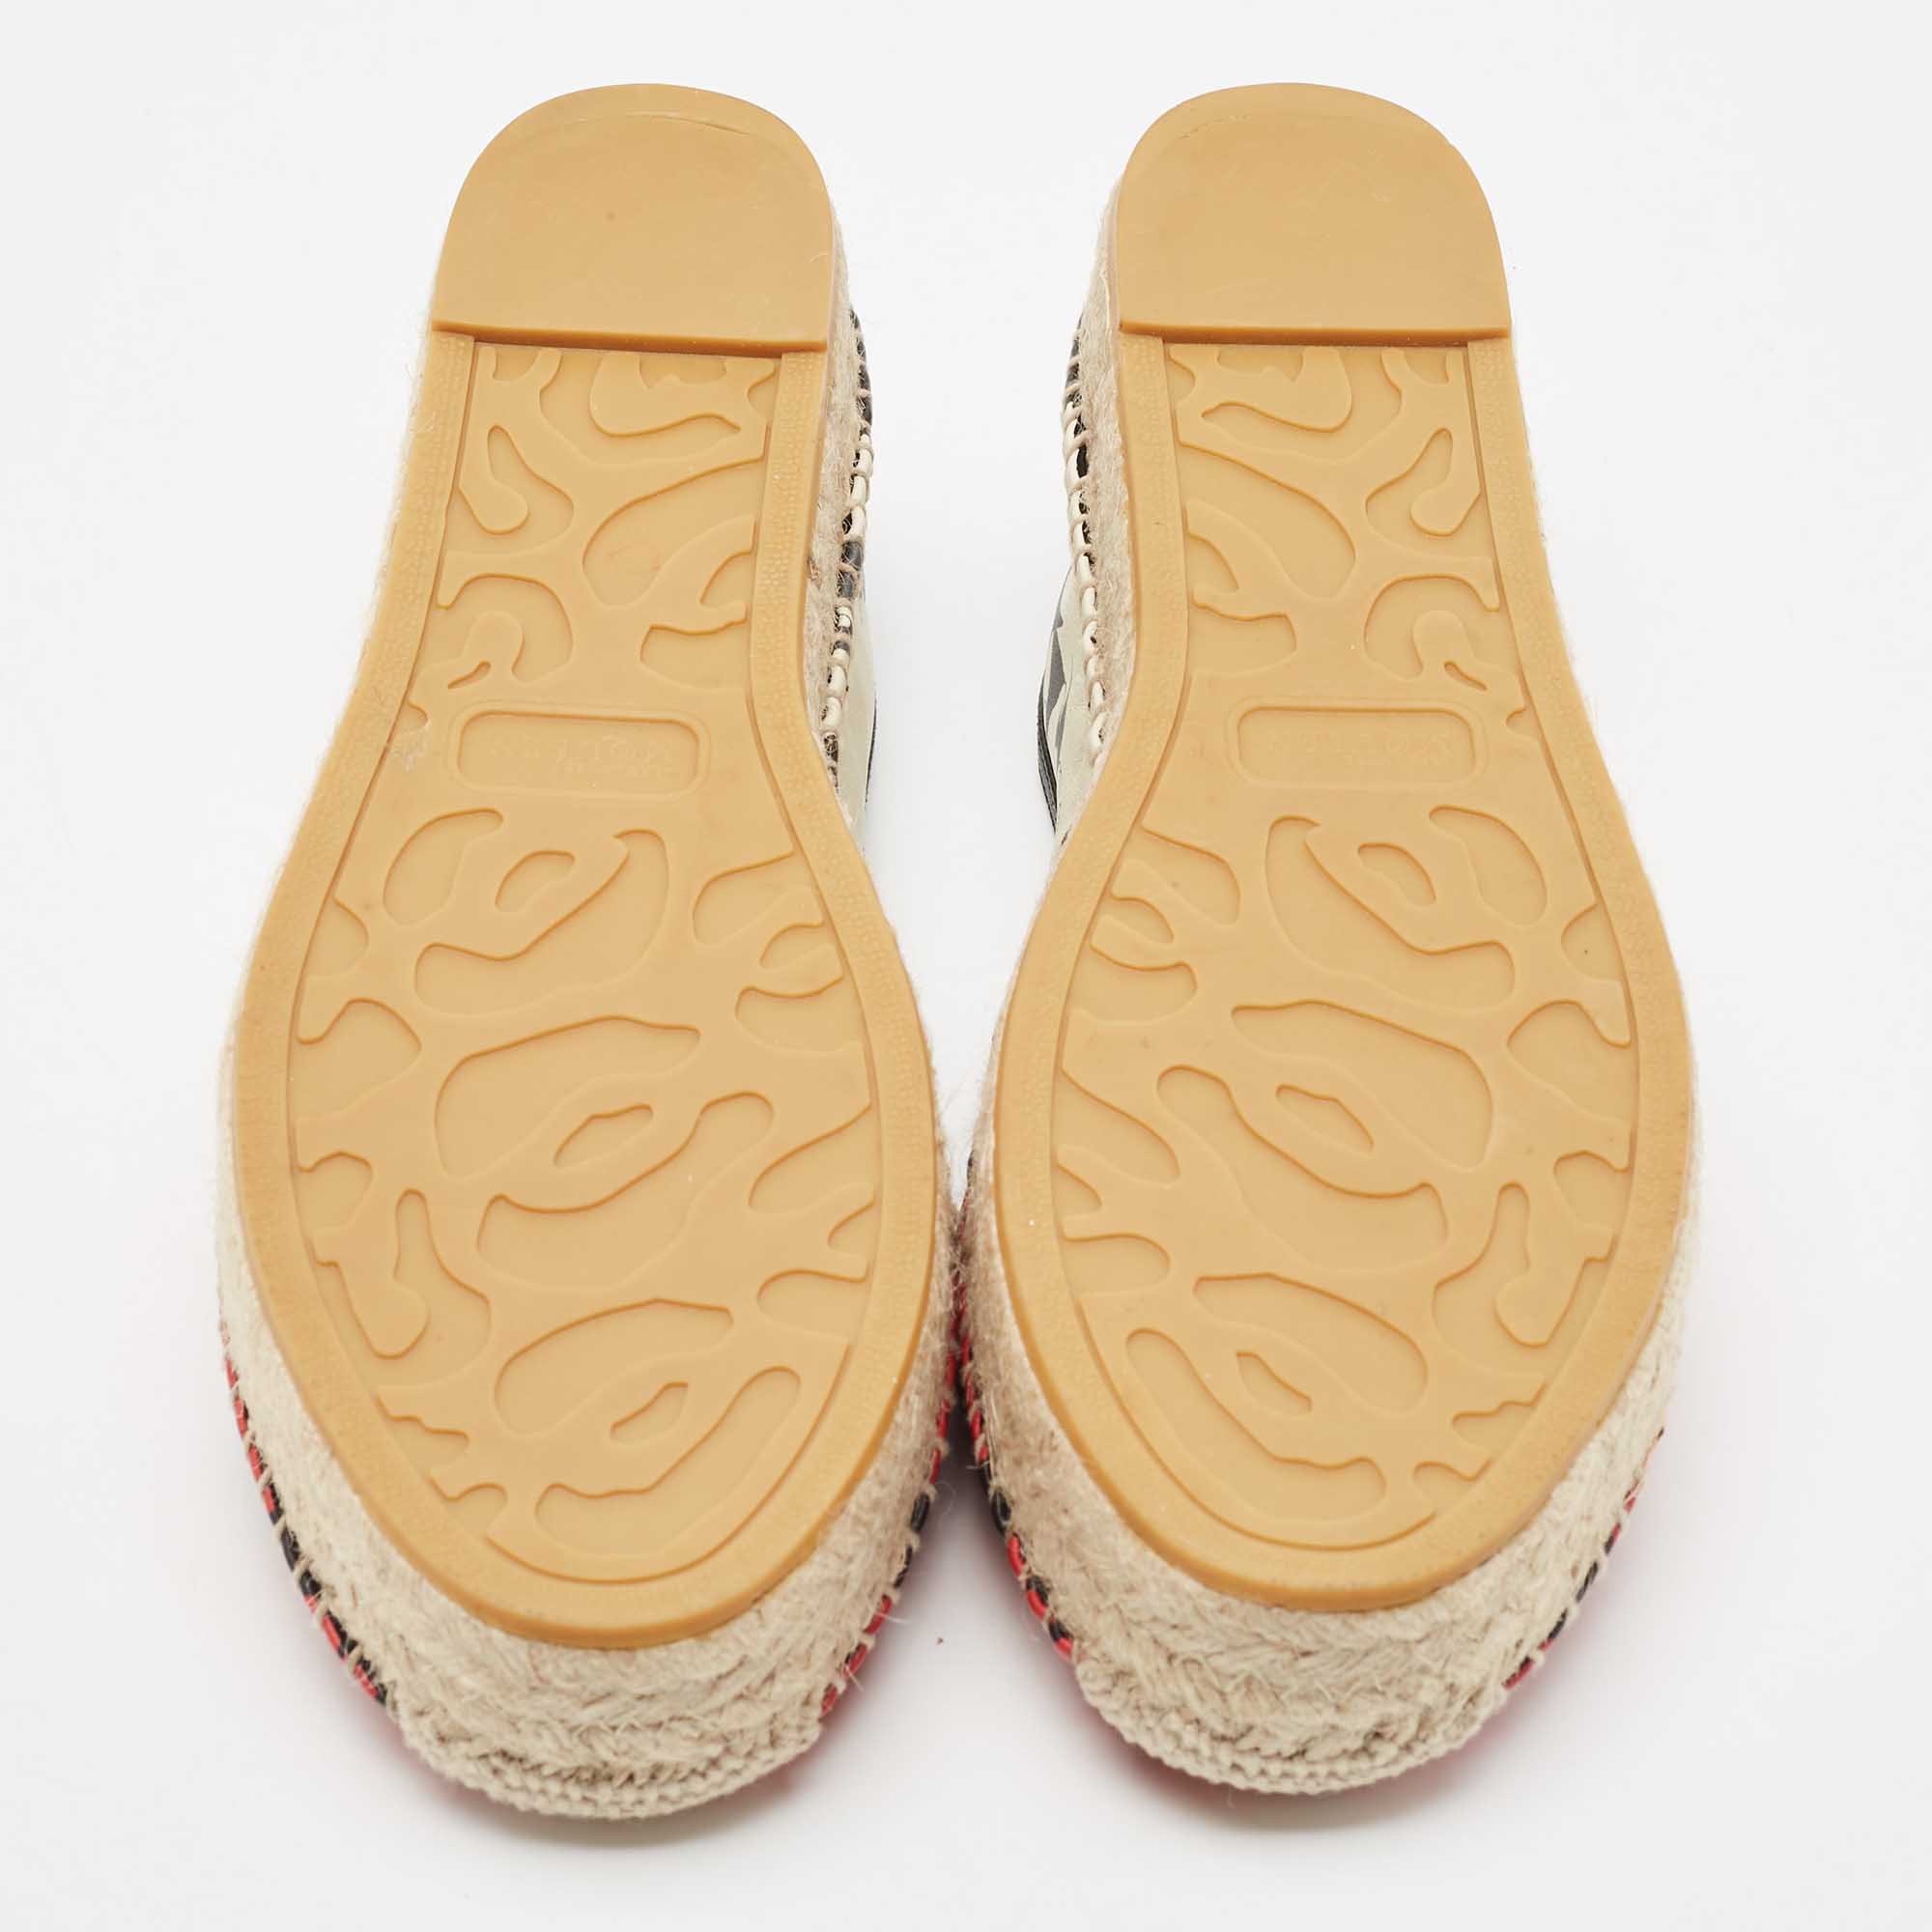 Alexander McQueen Tricolor Leather Espadrille Flats Size 40